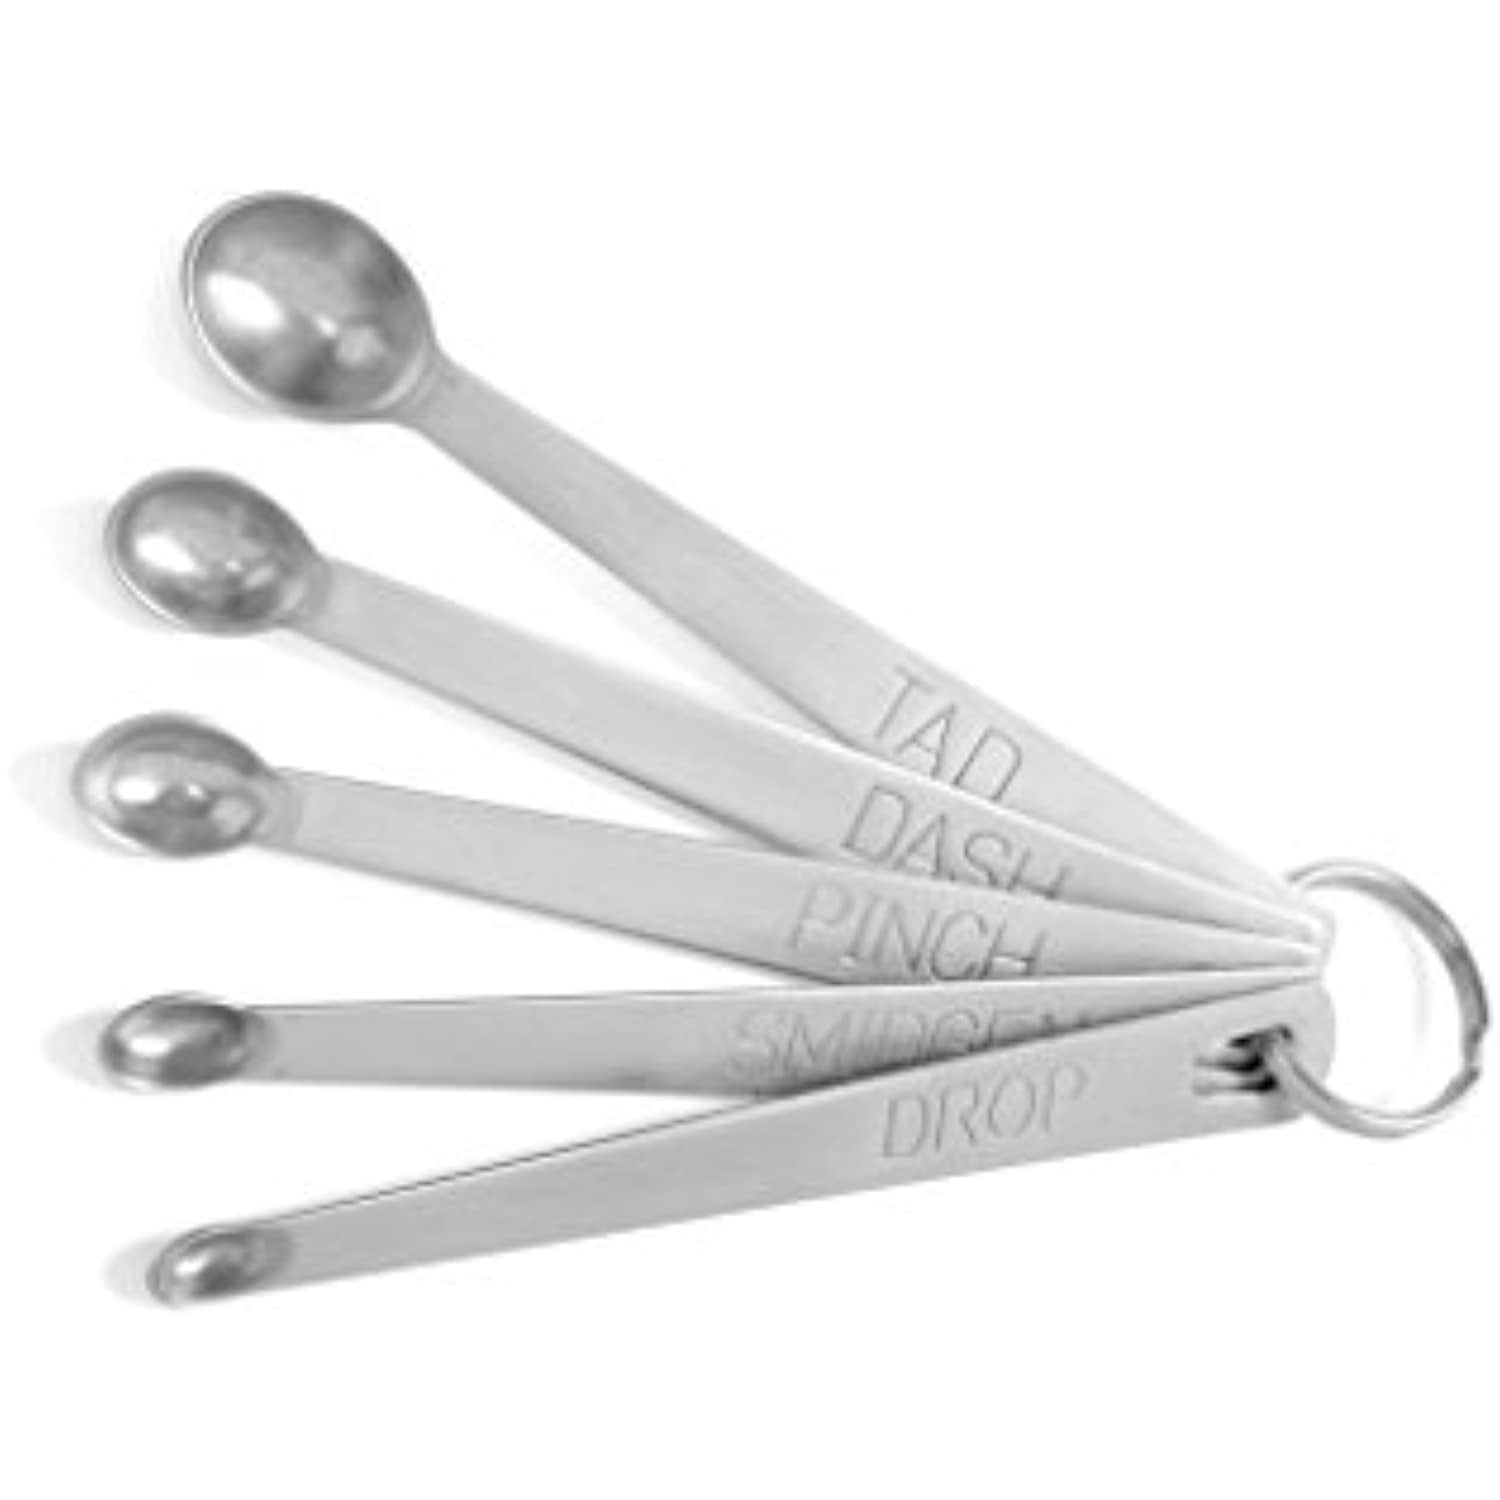 Norpro Mini Stainless Steel Measuring Spoons tad, dash, pinch, smidgen and drop Set of 5